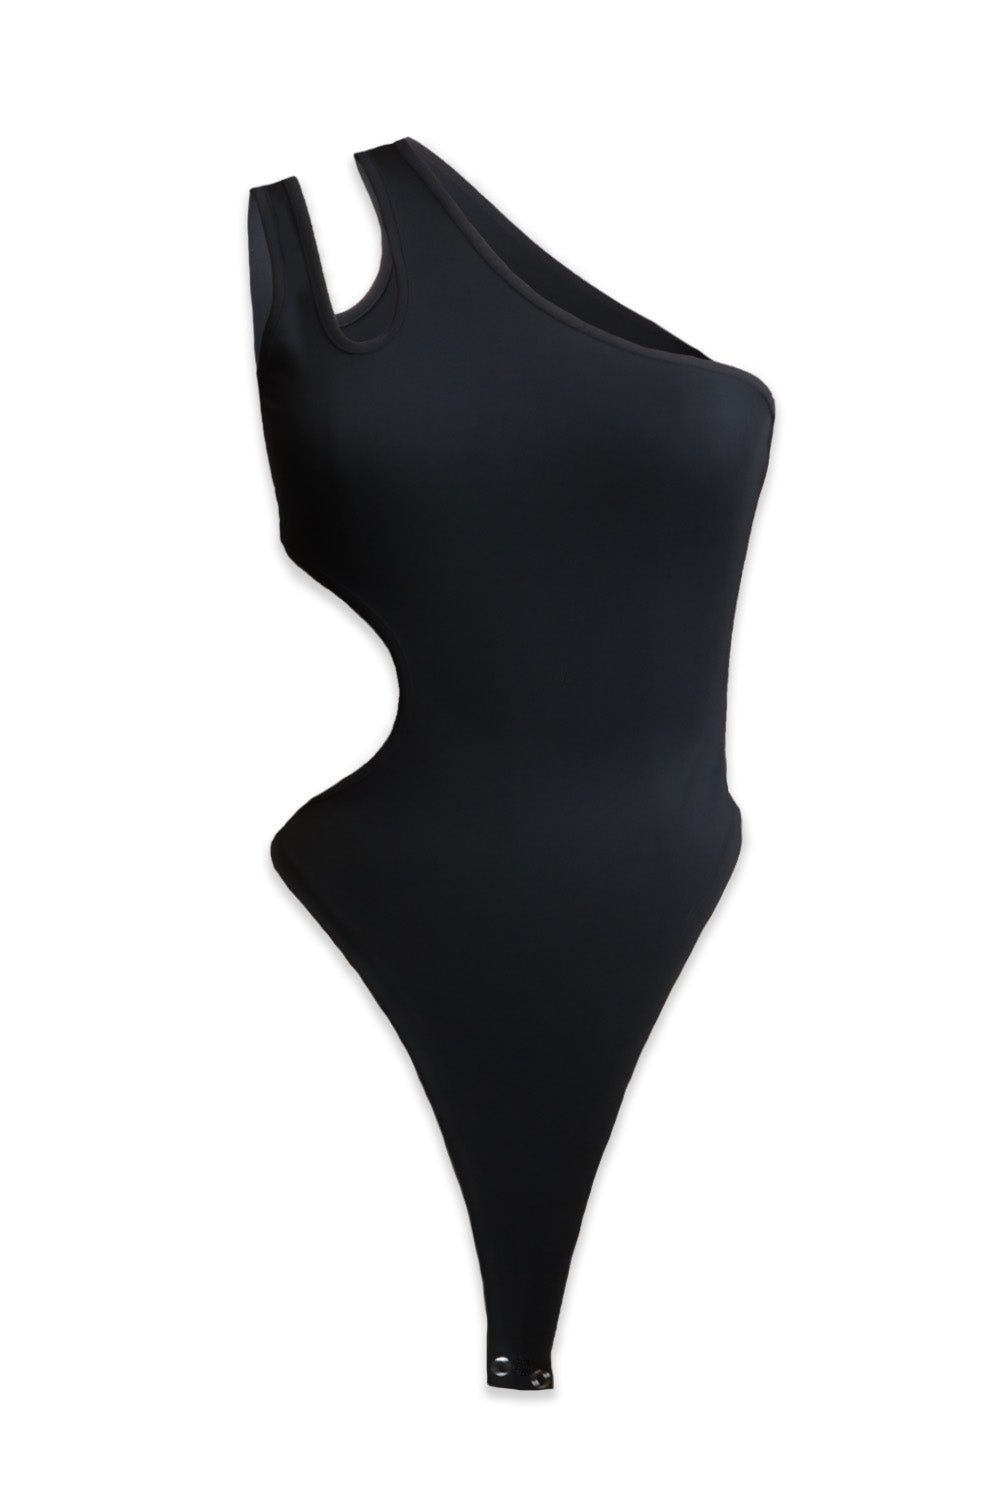 Black Side Cut Out Bodysuit - BEEGLEE